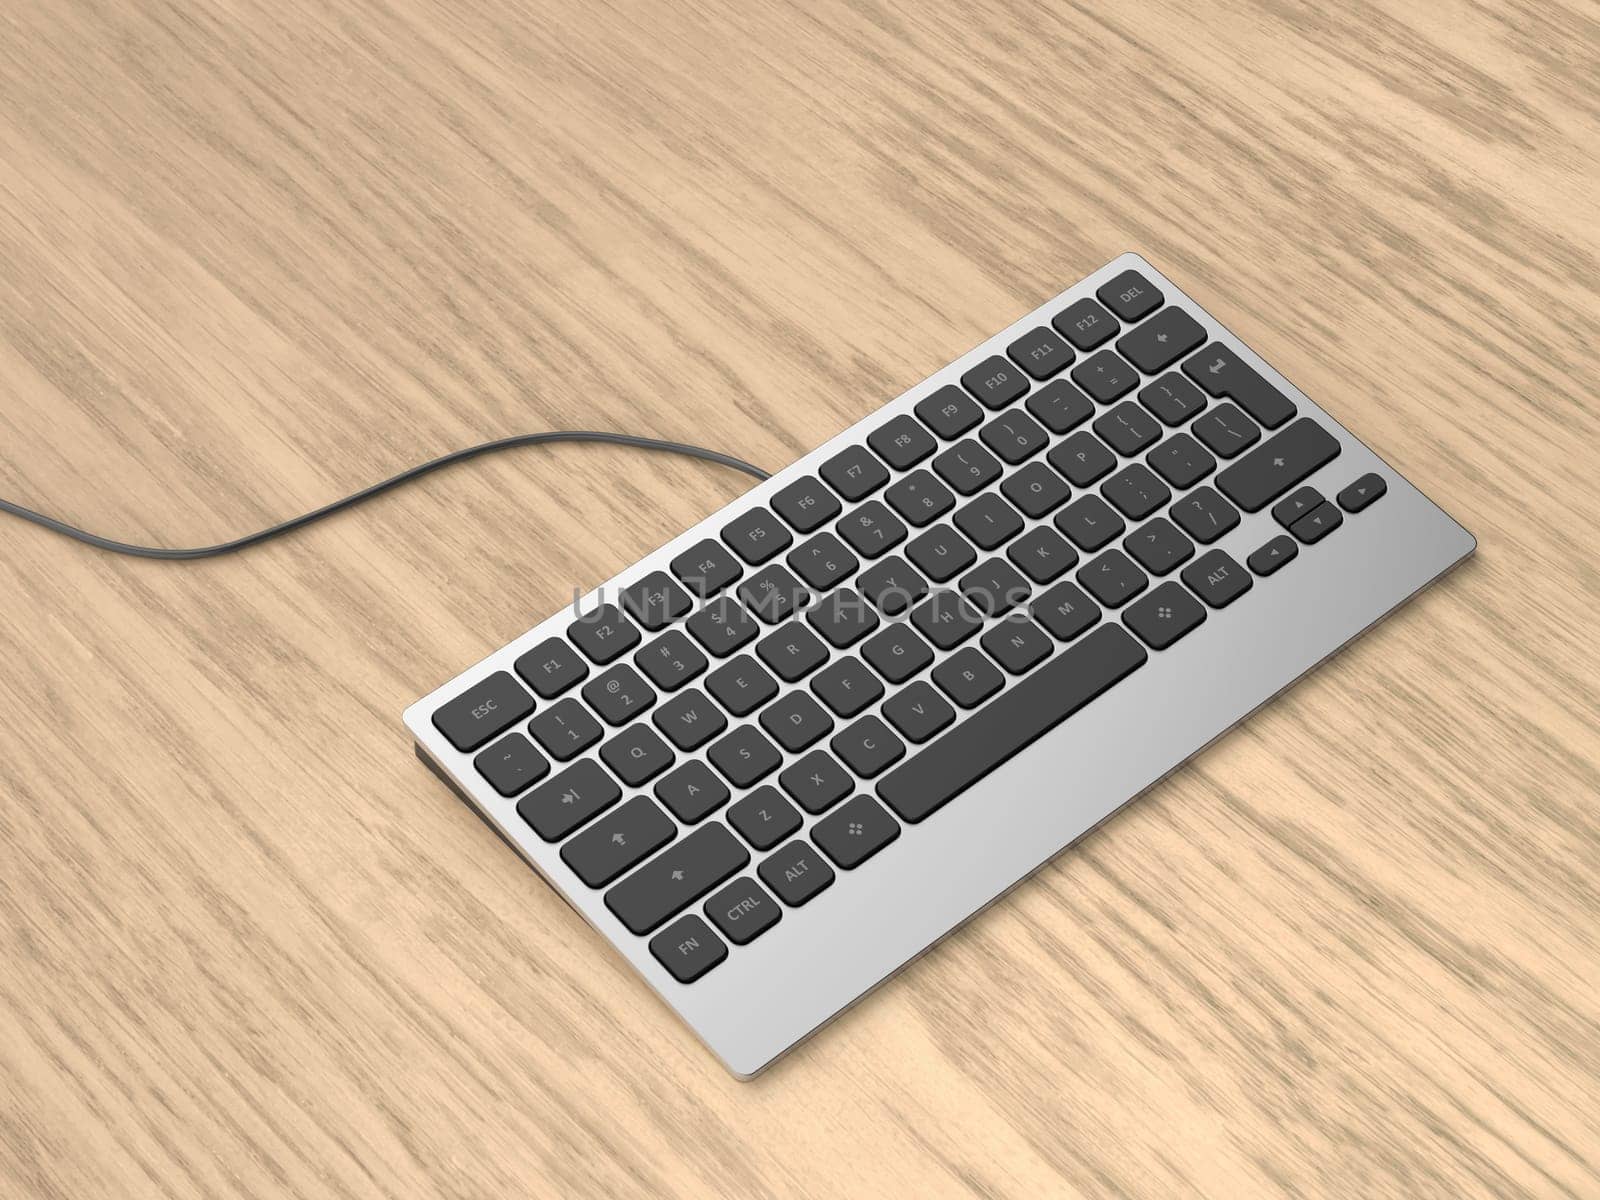 Modern wired computer keyboard on a wooden desk